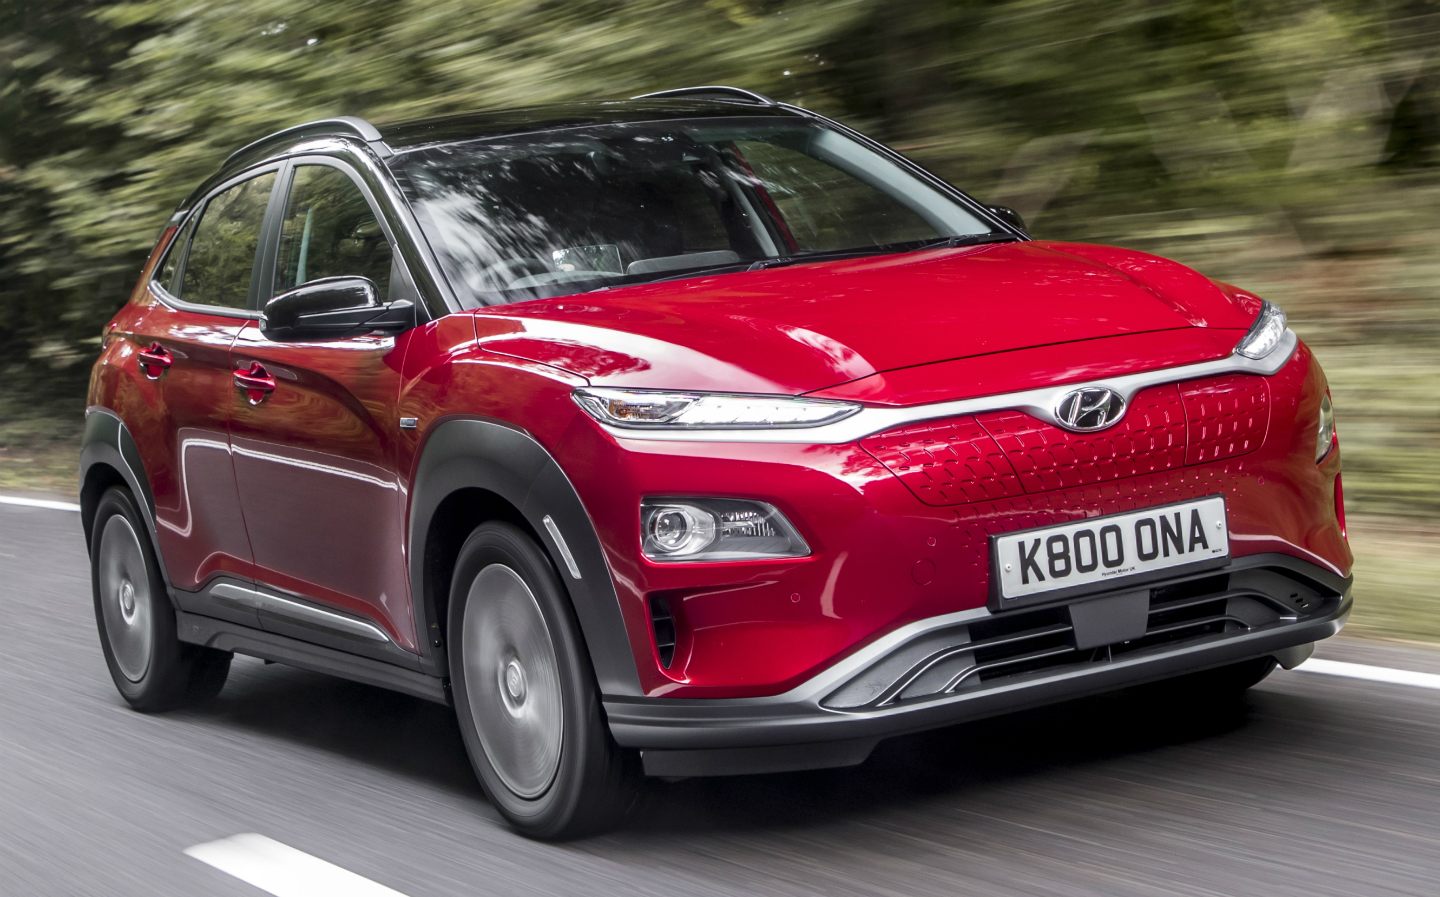 Sunday Times Motor Awards 2019 Best Electric Car of the Year. Hyundai Kona Electric